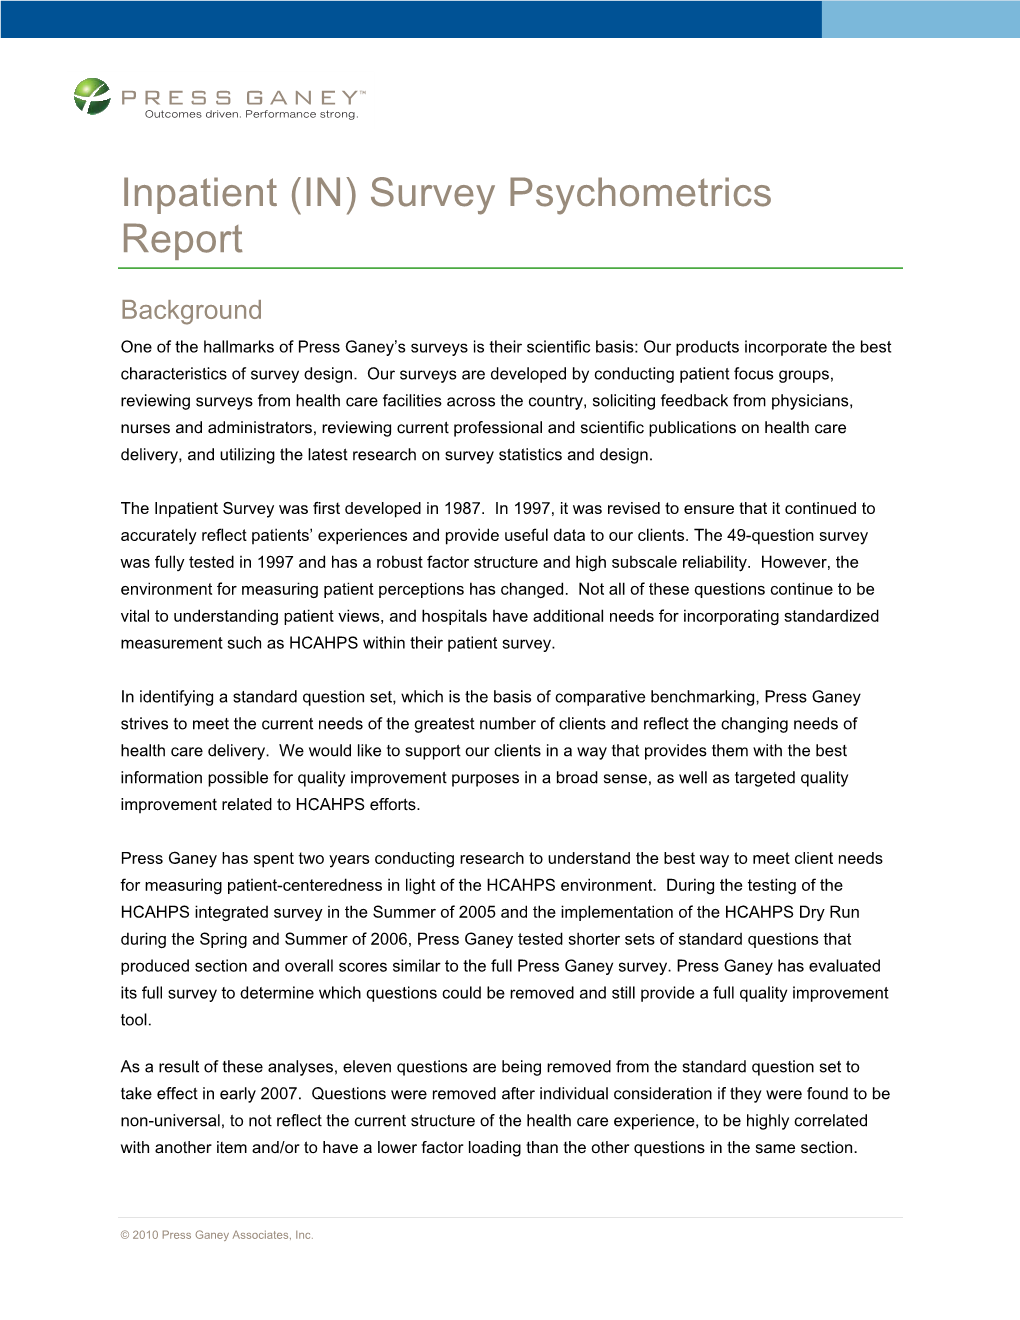 Inpatient (IN) Survey Psychometrics Report